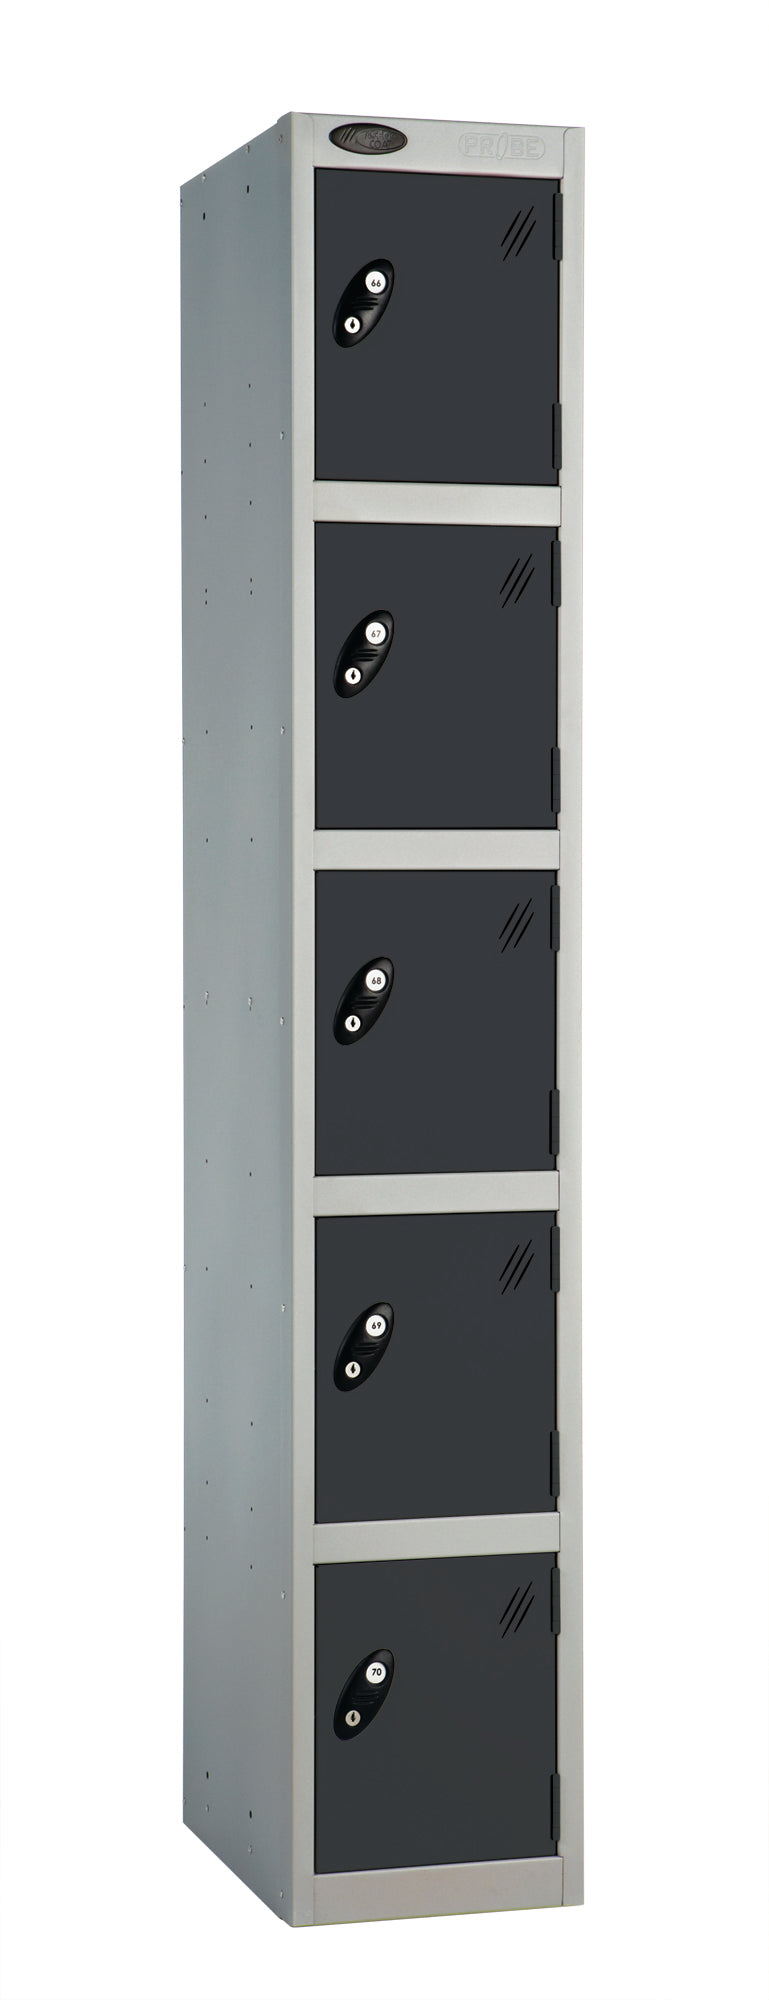 PROBEBOX STANDARD 1 NEST STEEL LOCKERS - JET BLACK 5 DOOR Storage Lockers > Lockers > Cabinets > Storage > Probe > One Stop For Safety   